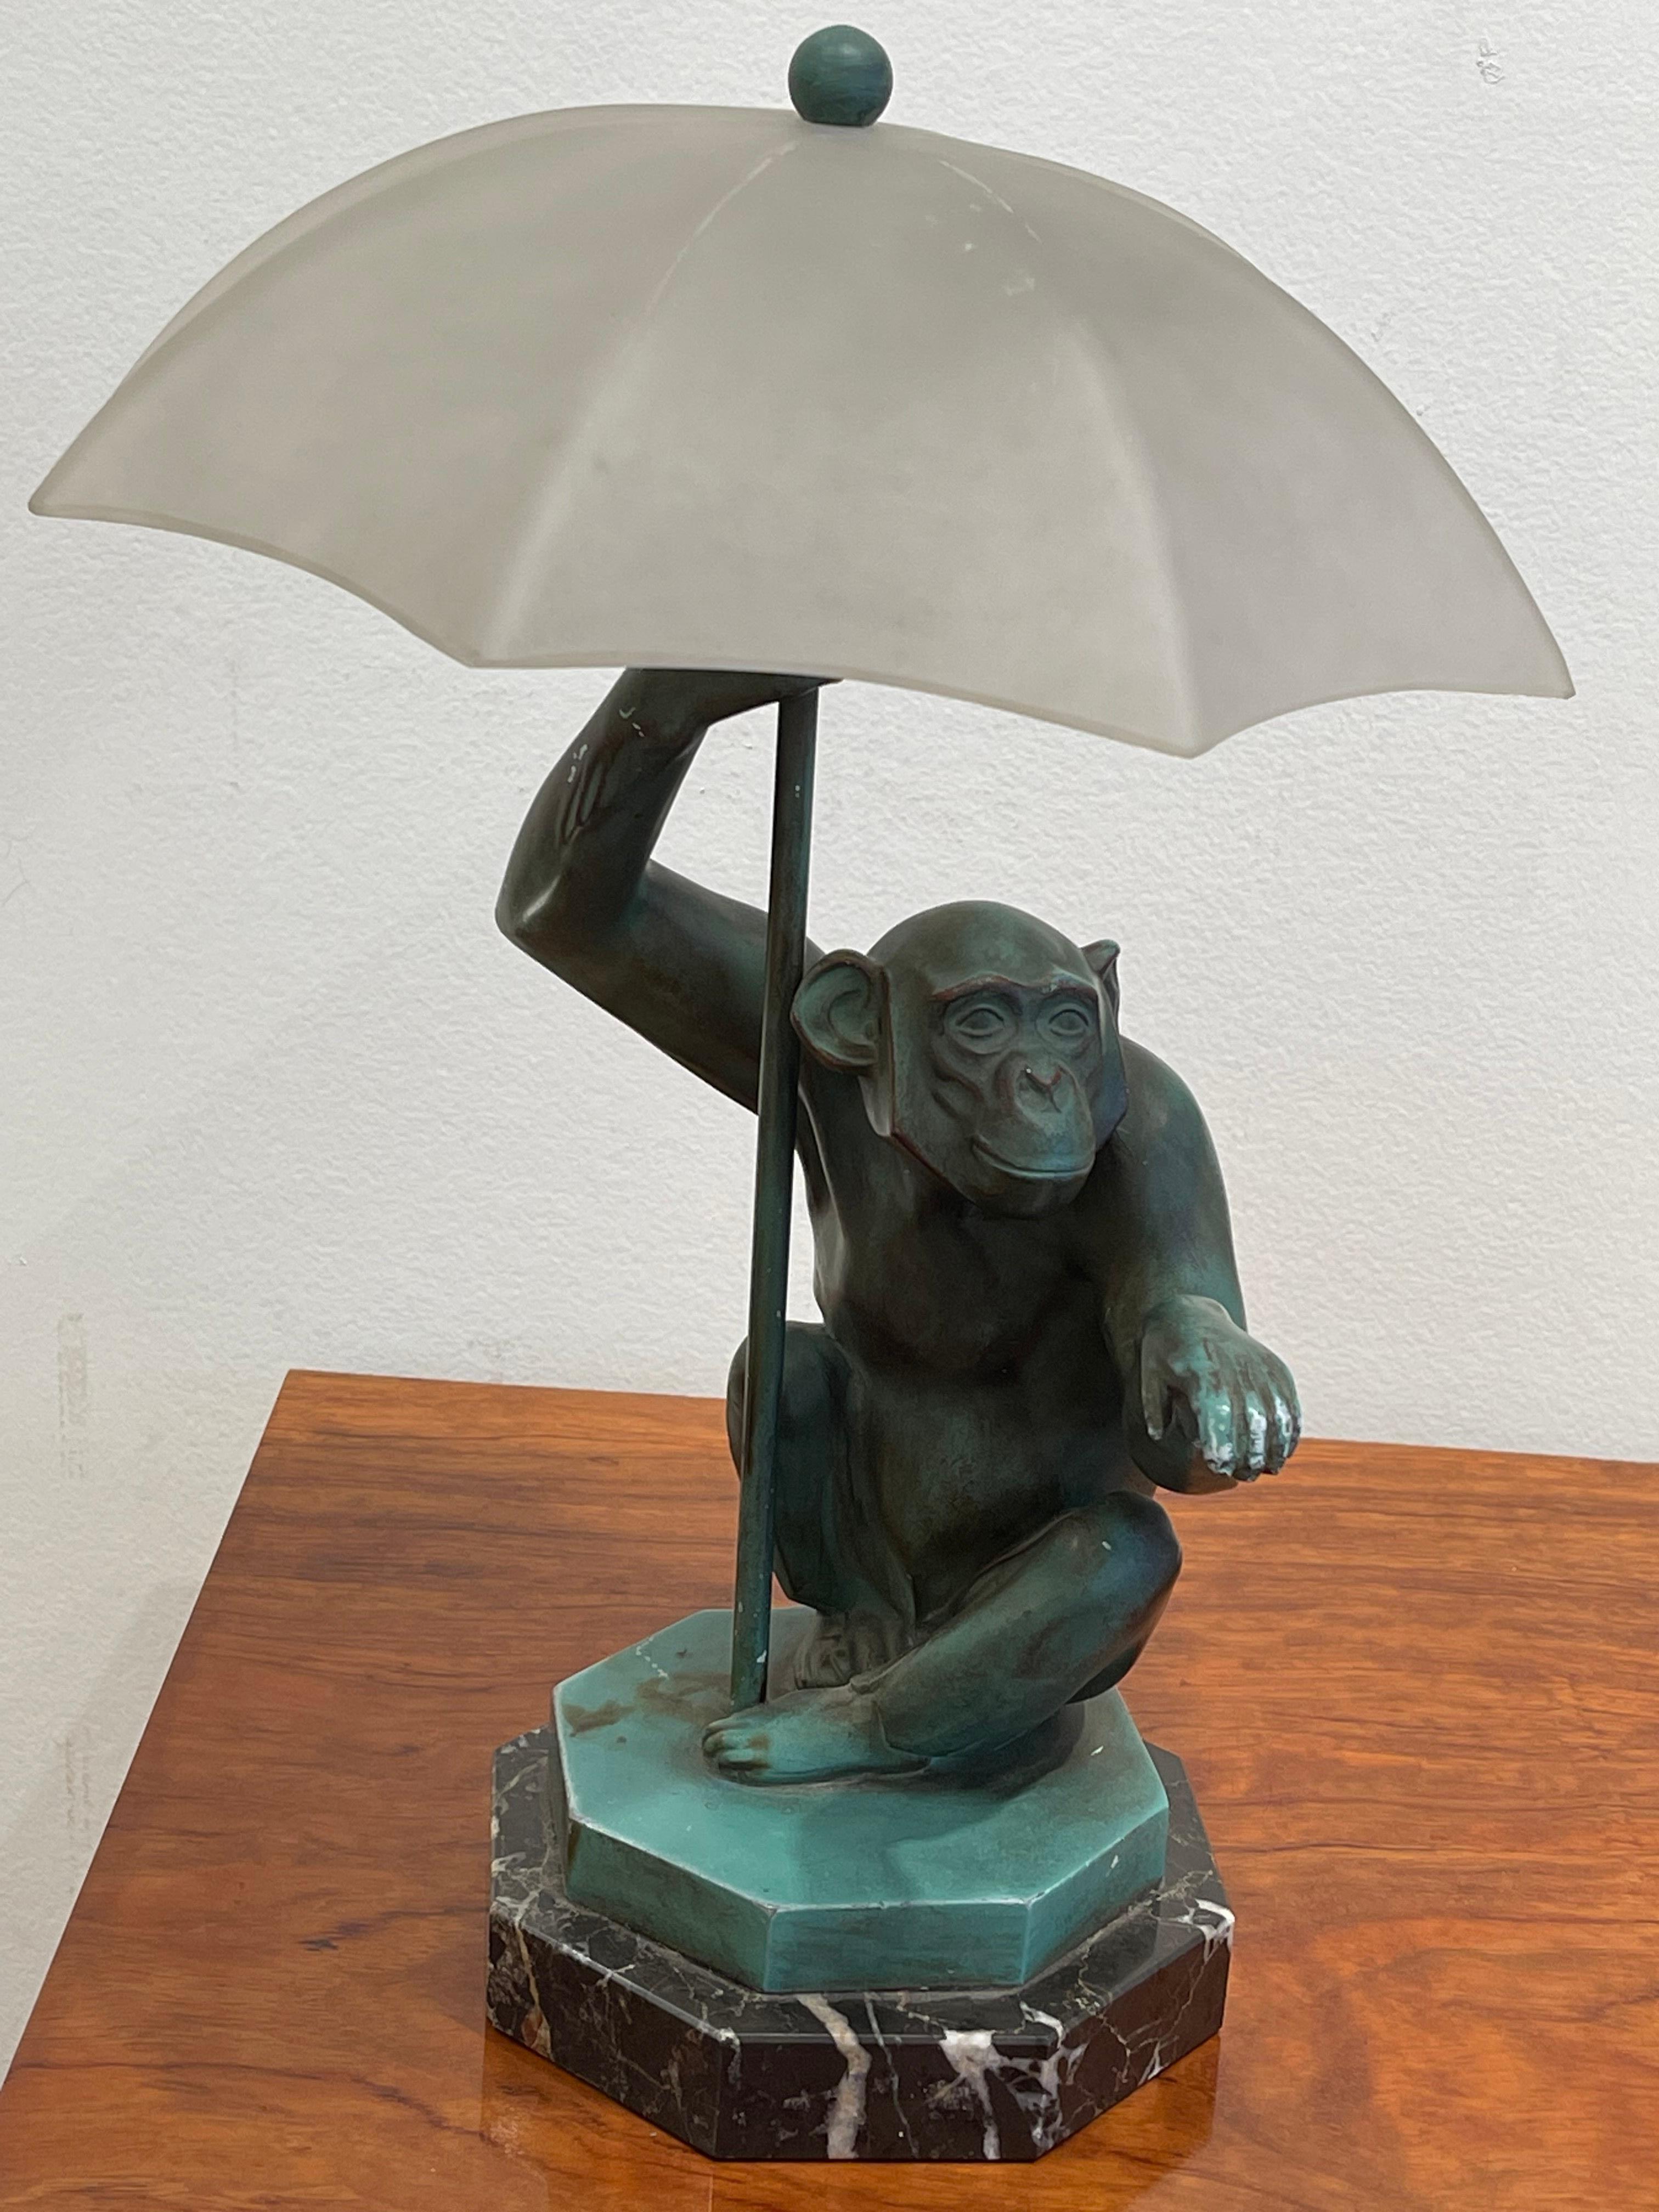 Exceptional Art Deco sculpture/lamp by Max Le Verrier (1891-1973) representing a monkey under an umbrella. It is titled La Pluie 